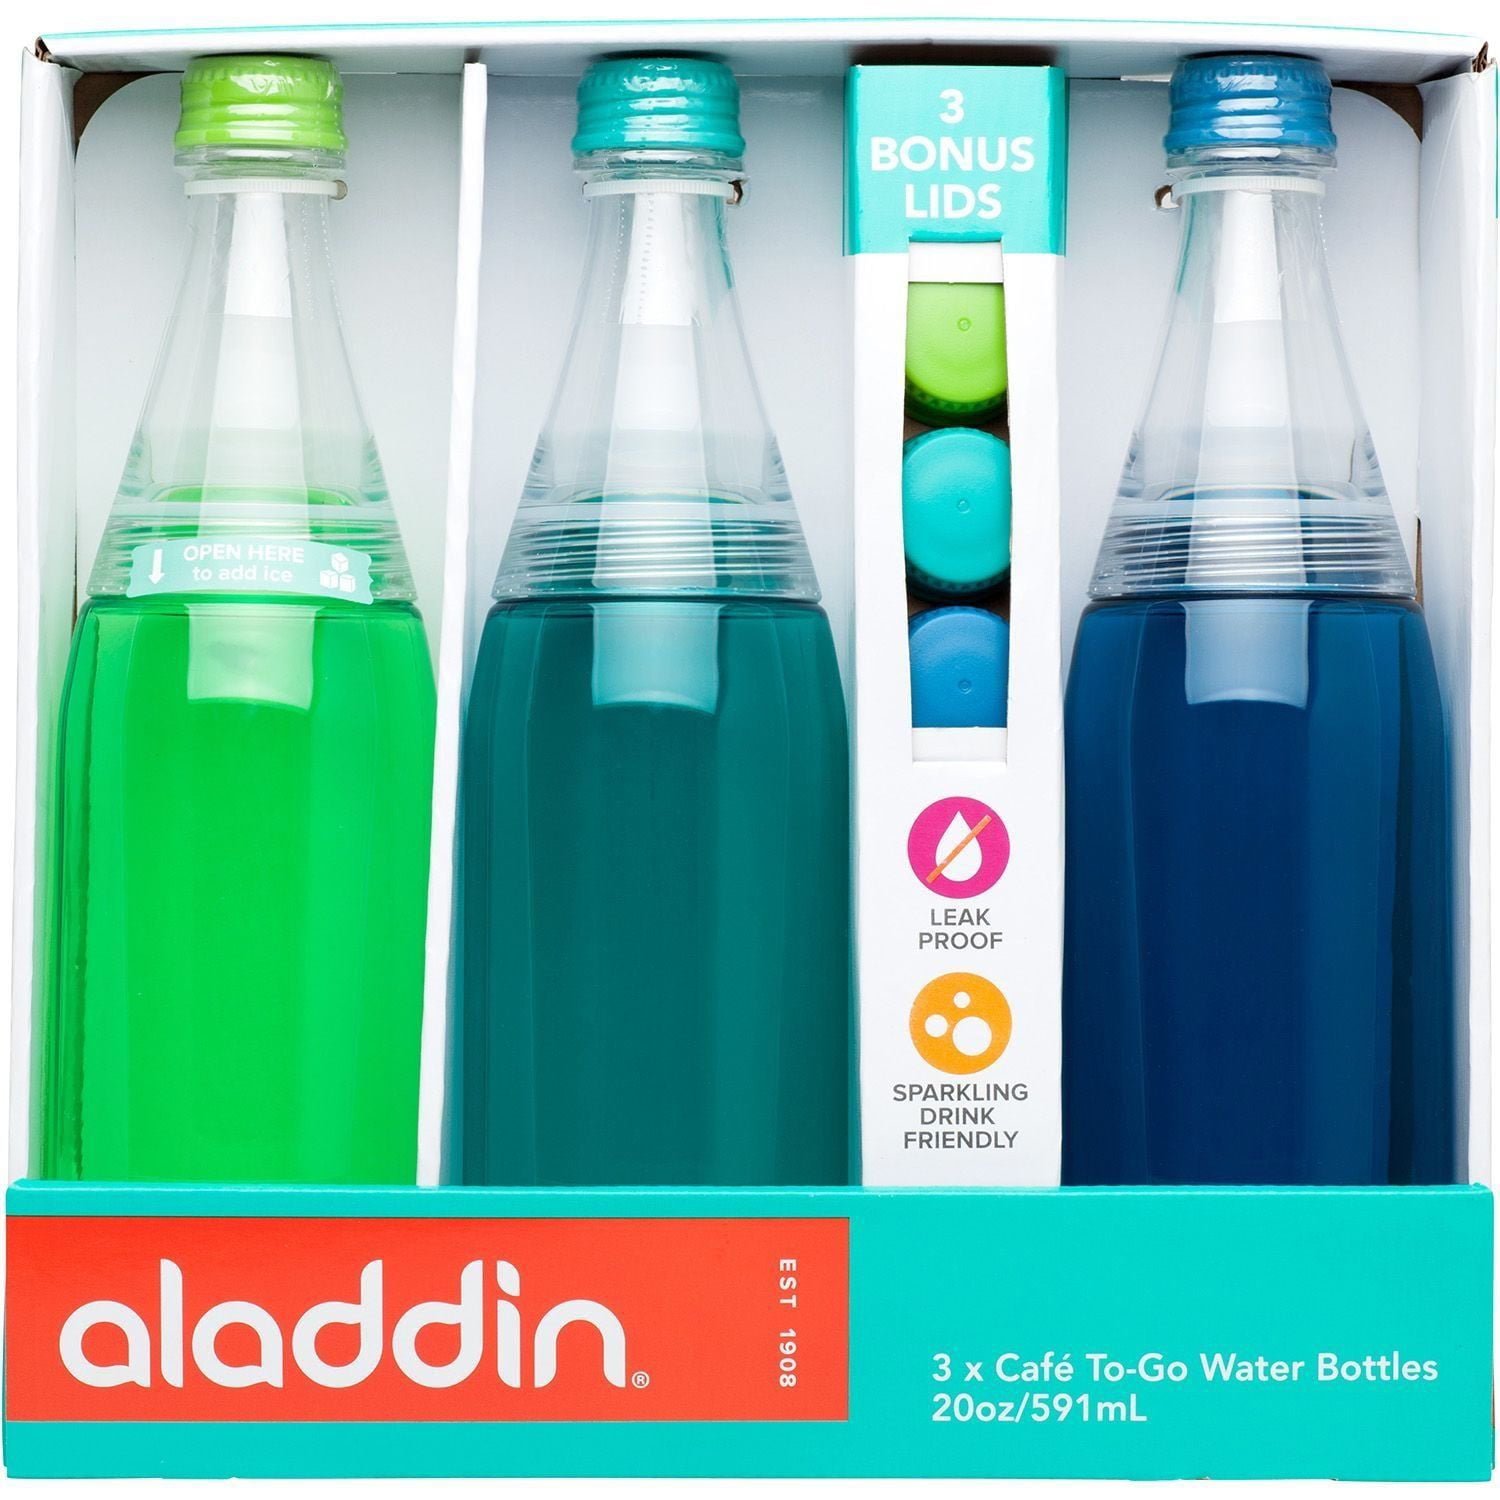 Aladdin 3pc Cafe To Go 20oz Leak Proof Water Bottles w/ 3 Bonus Lids New!!!  